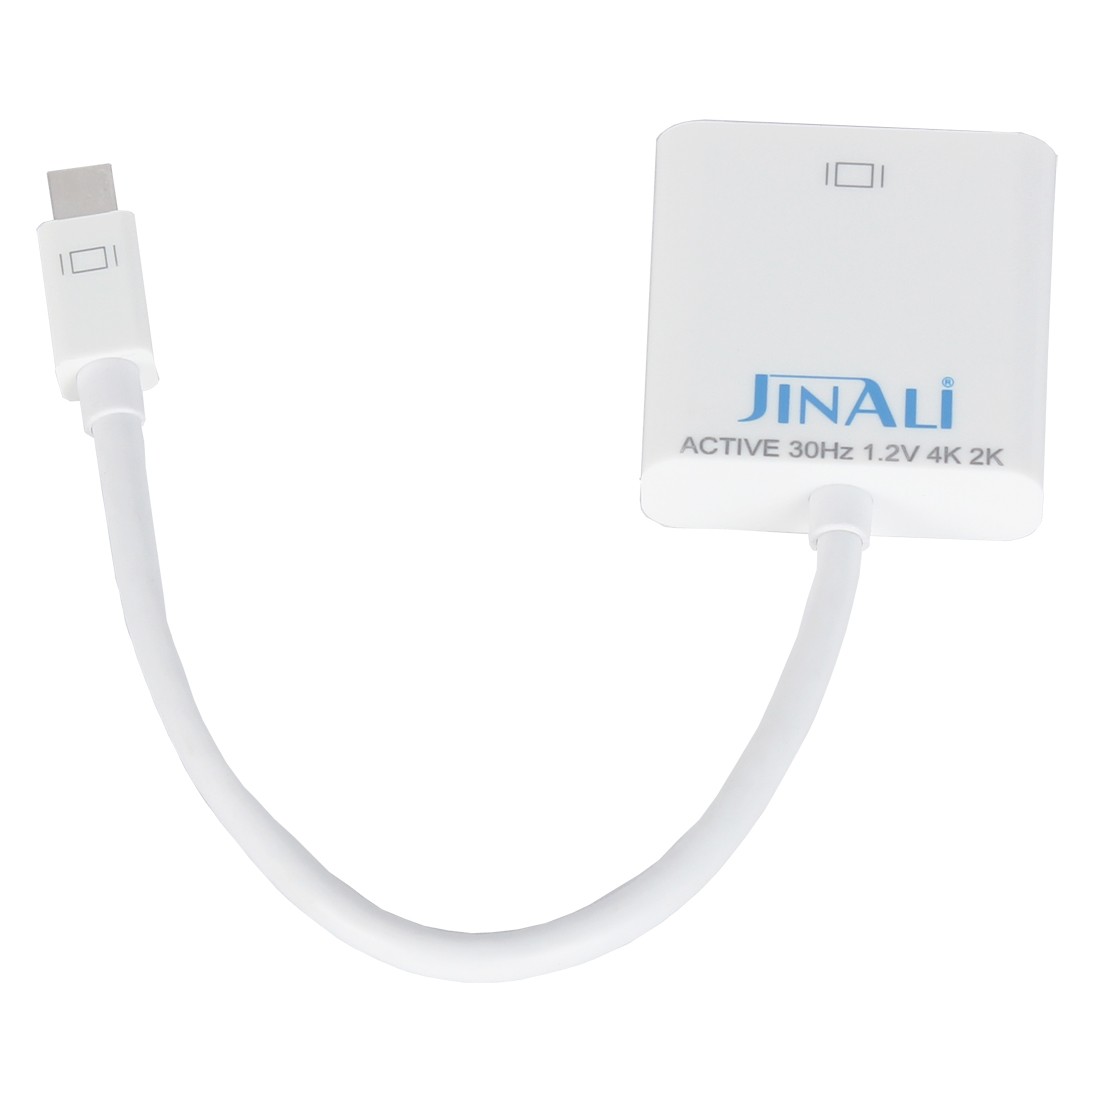 Jinali Mini Display Port to HDMI 4K Audio / Video Converter – M-DP 1.2 to HDMI Active Adapter 4K @ 30 Hz - Black